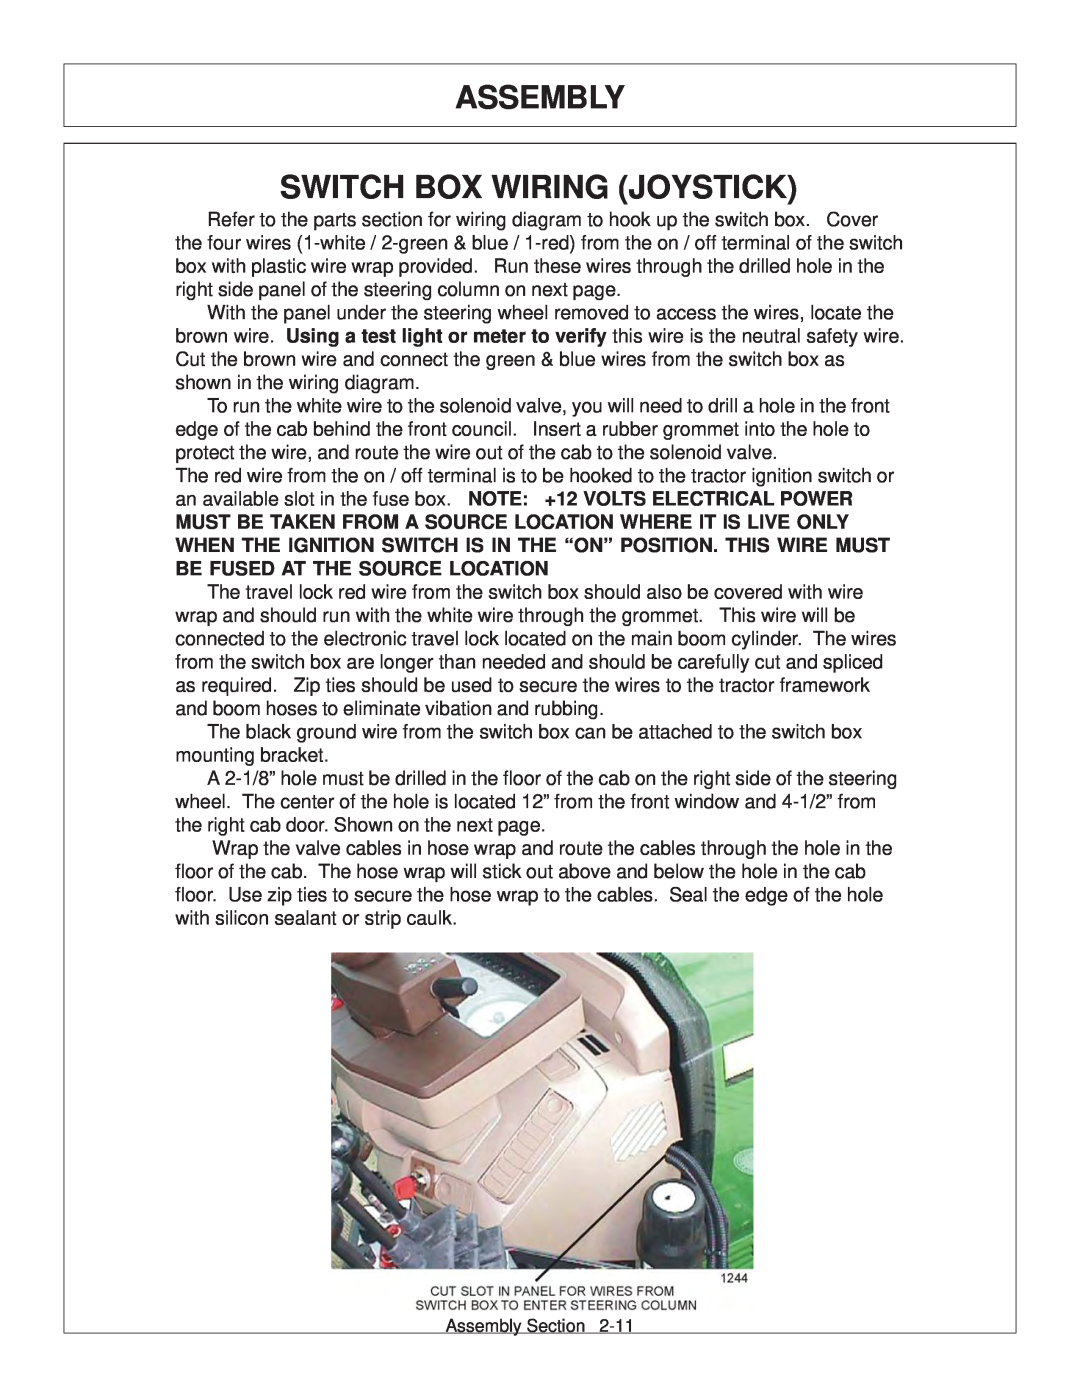 Tiger JD 62-6420 manual Assembly Switch Box Wiring Joystick 